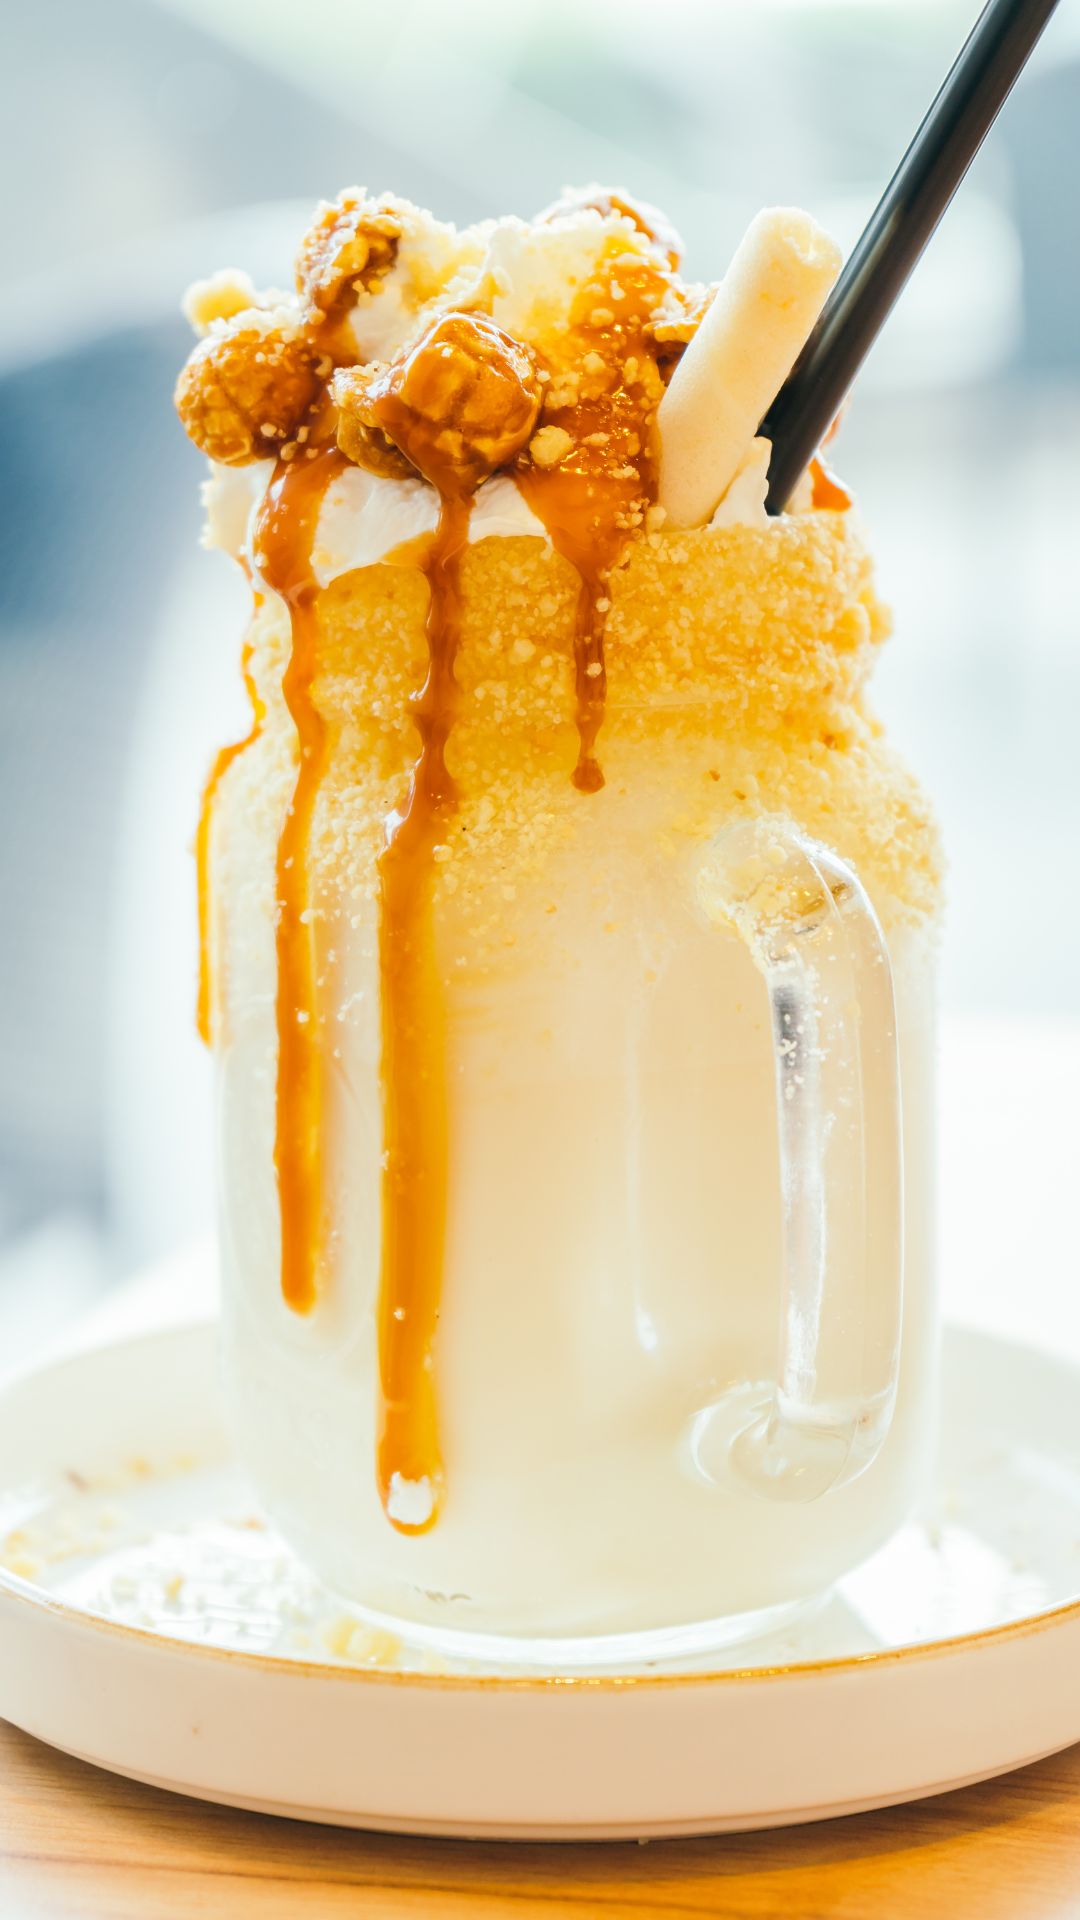 A boozy caramel milk shake in a glass jar with caramel popcorn and a straw